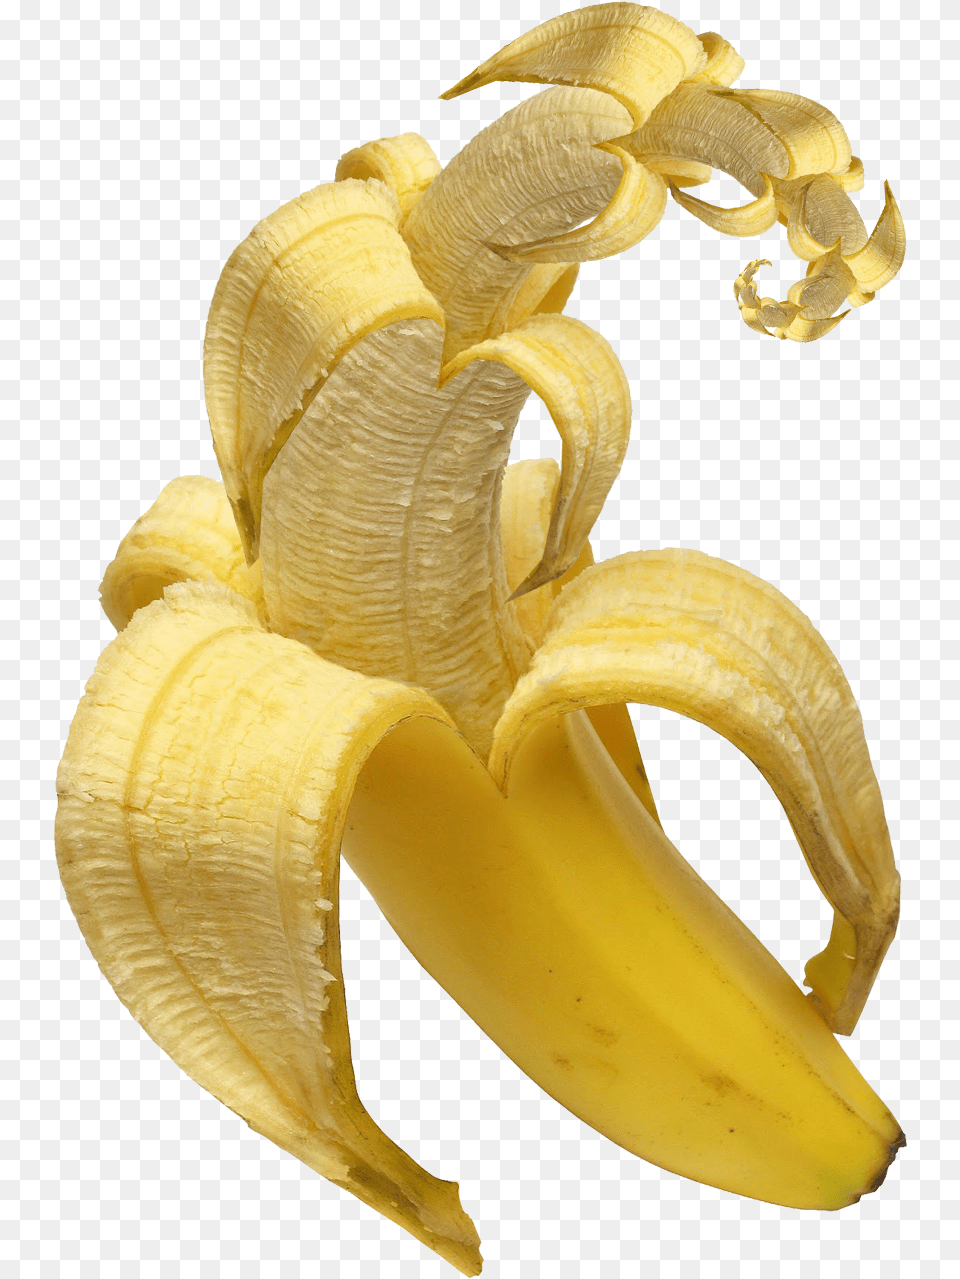 Banana Banana Family Fruit Food Produce Inside Of A Banana, Plant Png